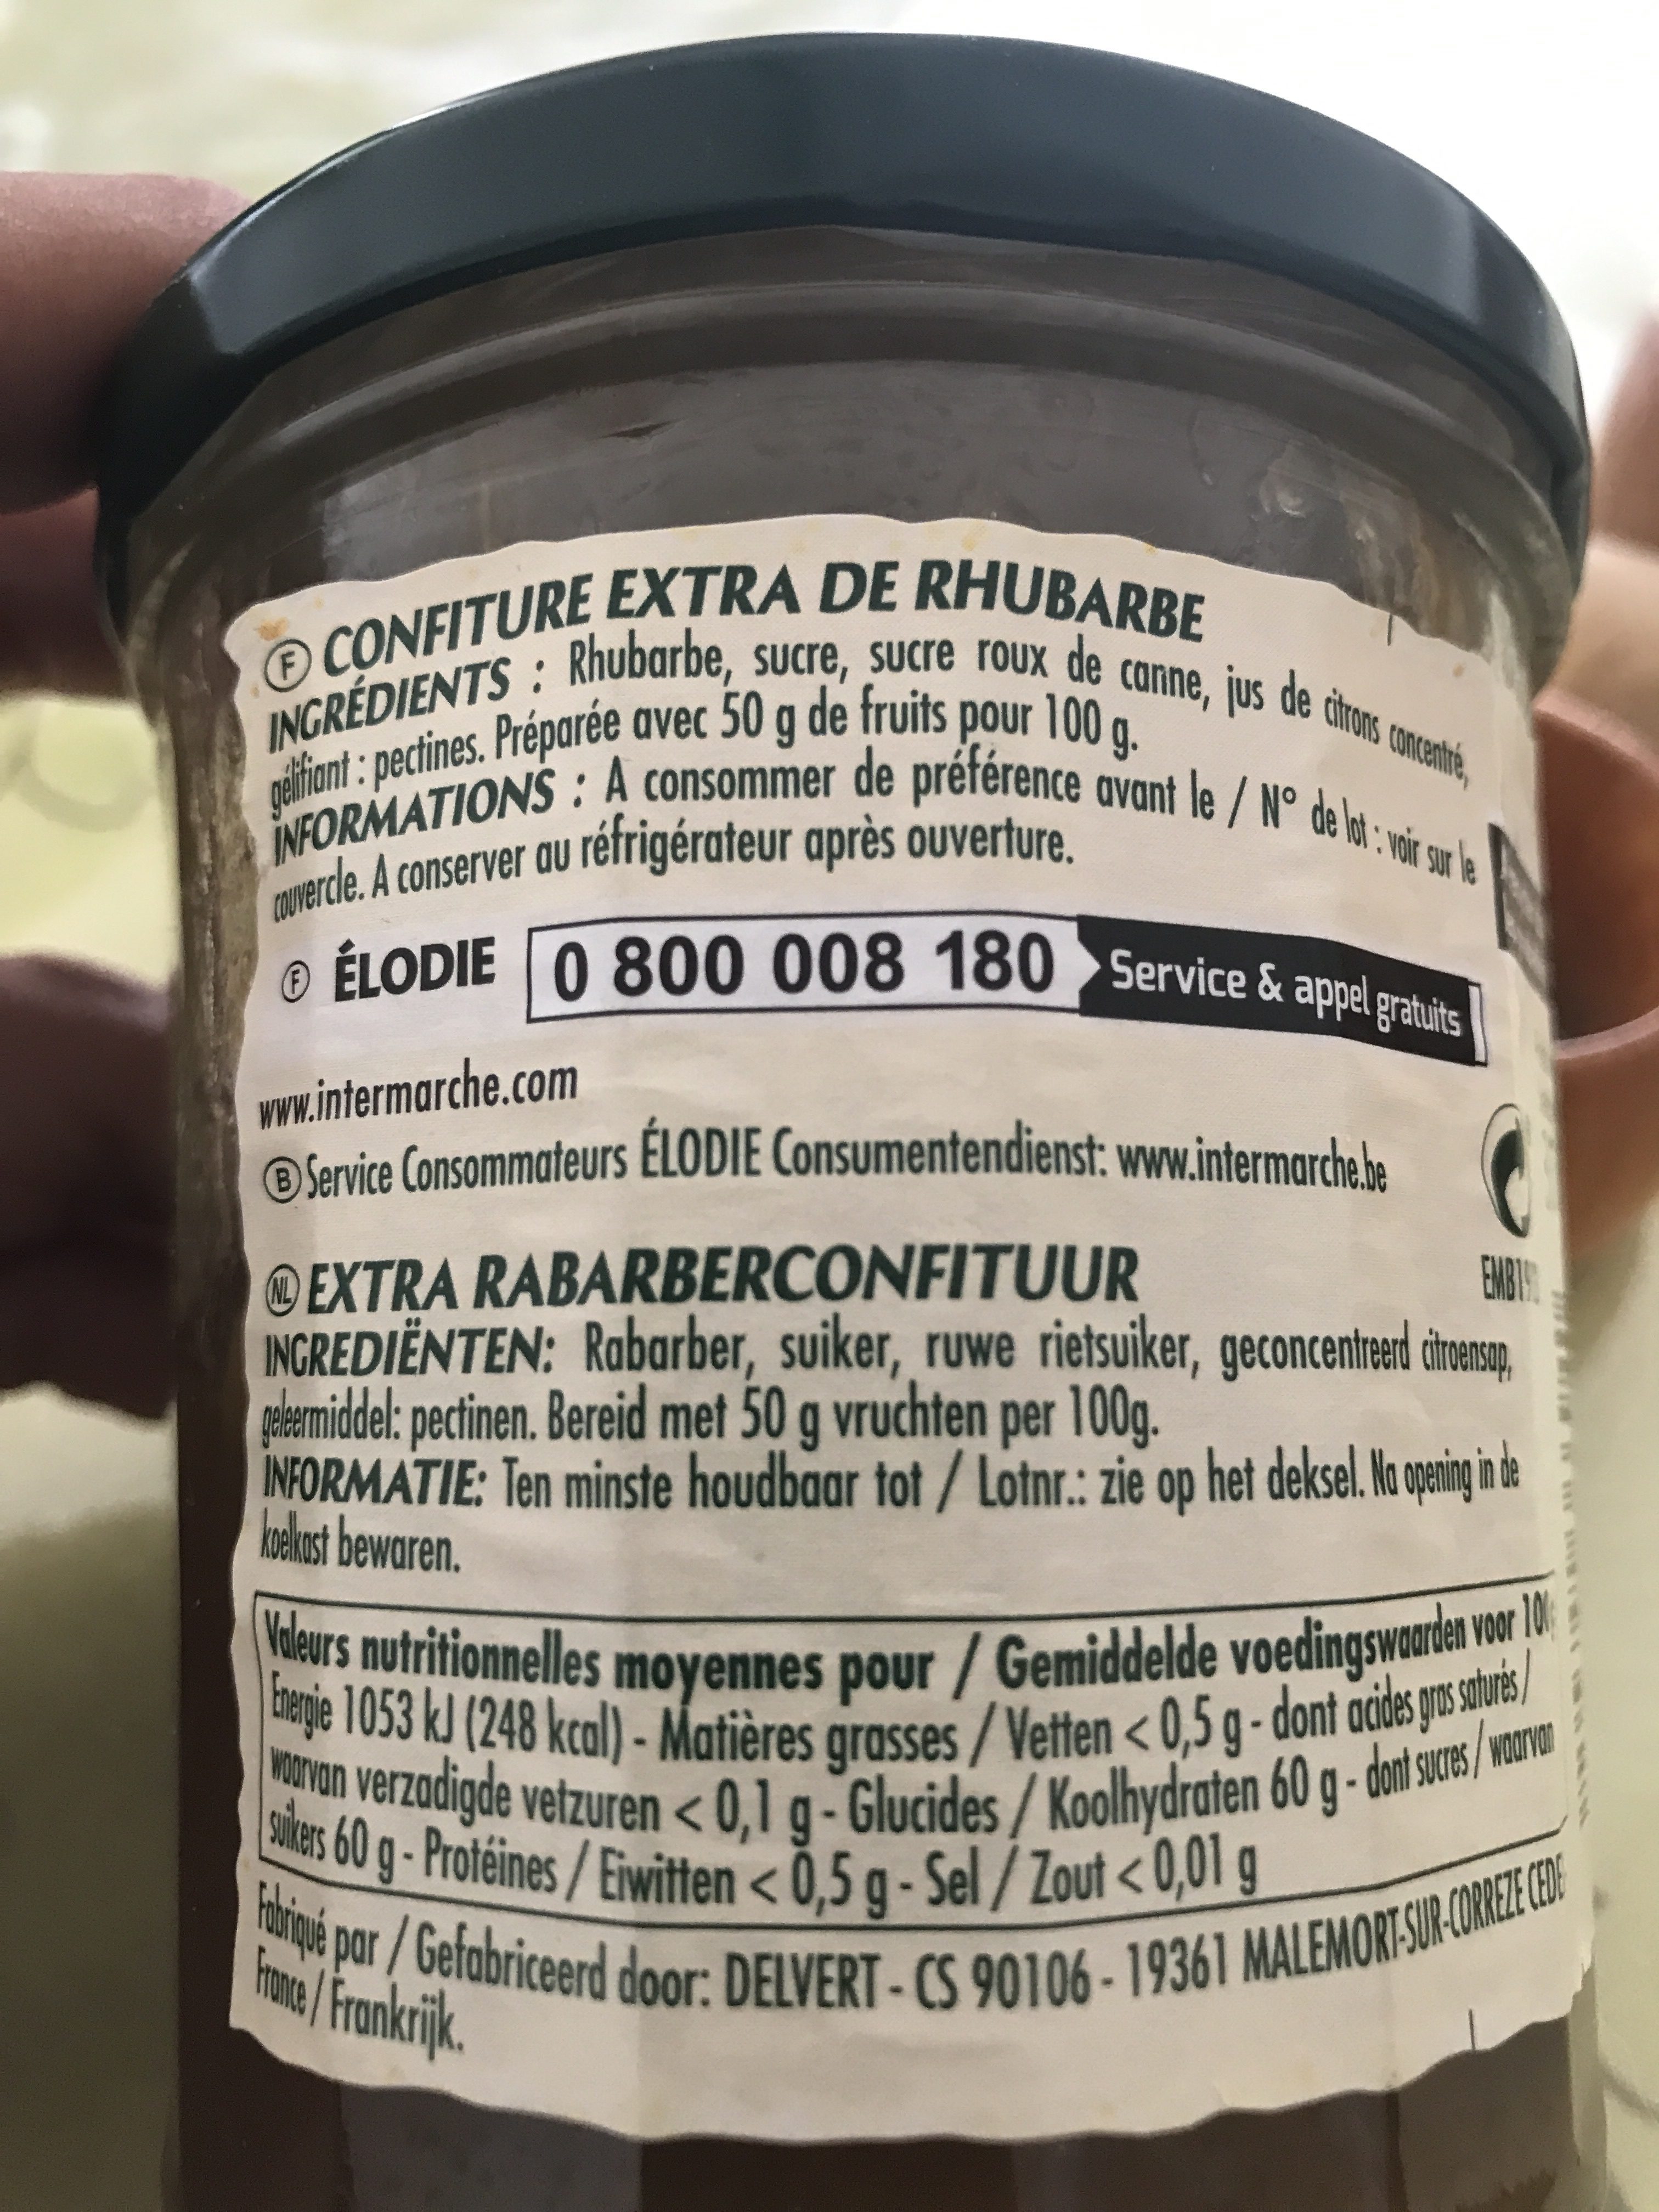 Confiture extra rhubarbe - Ingredientes - fr